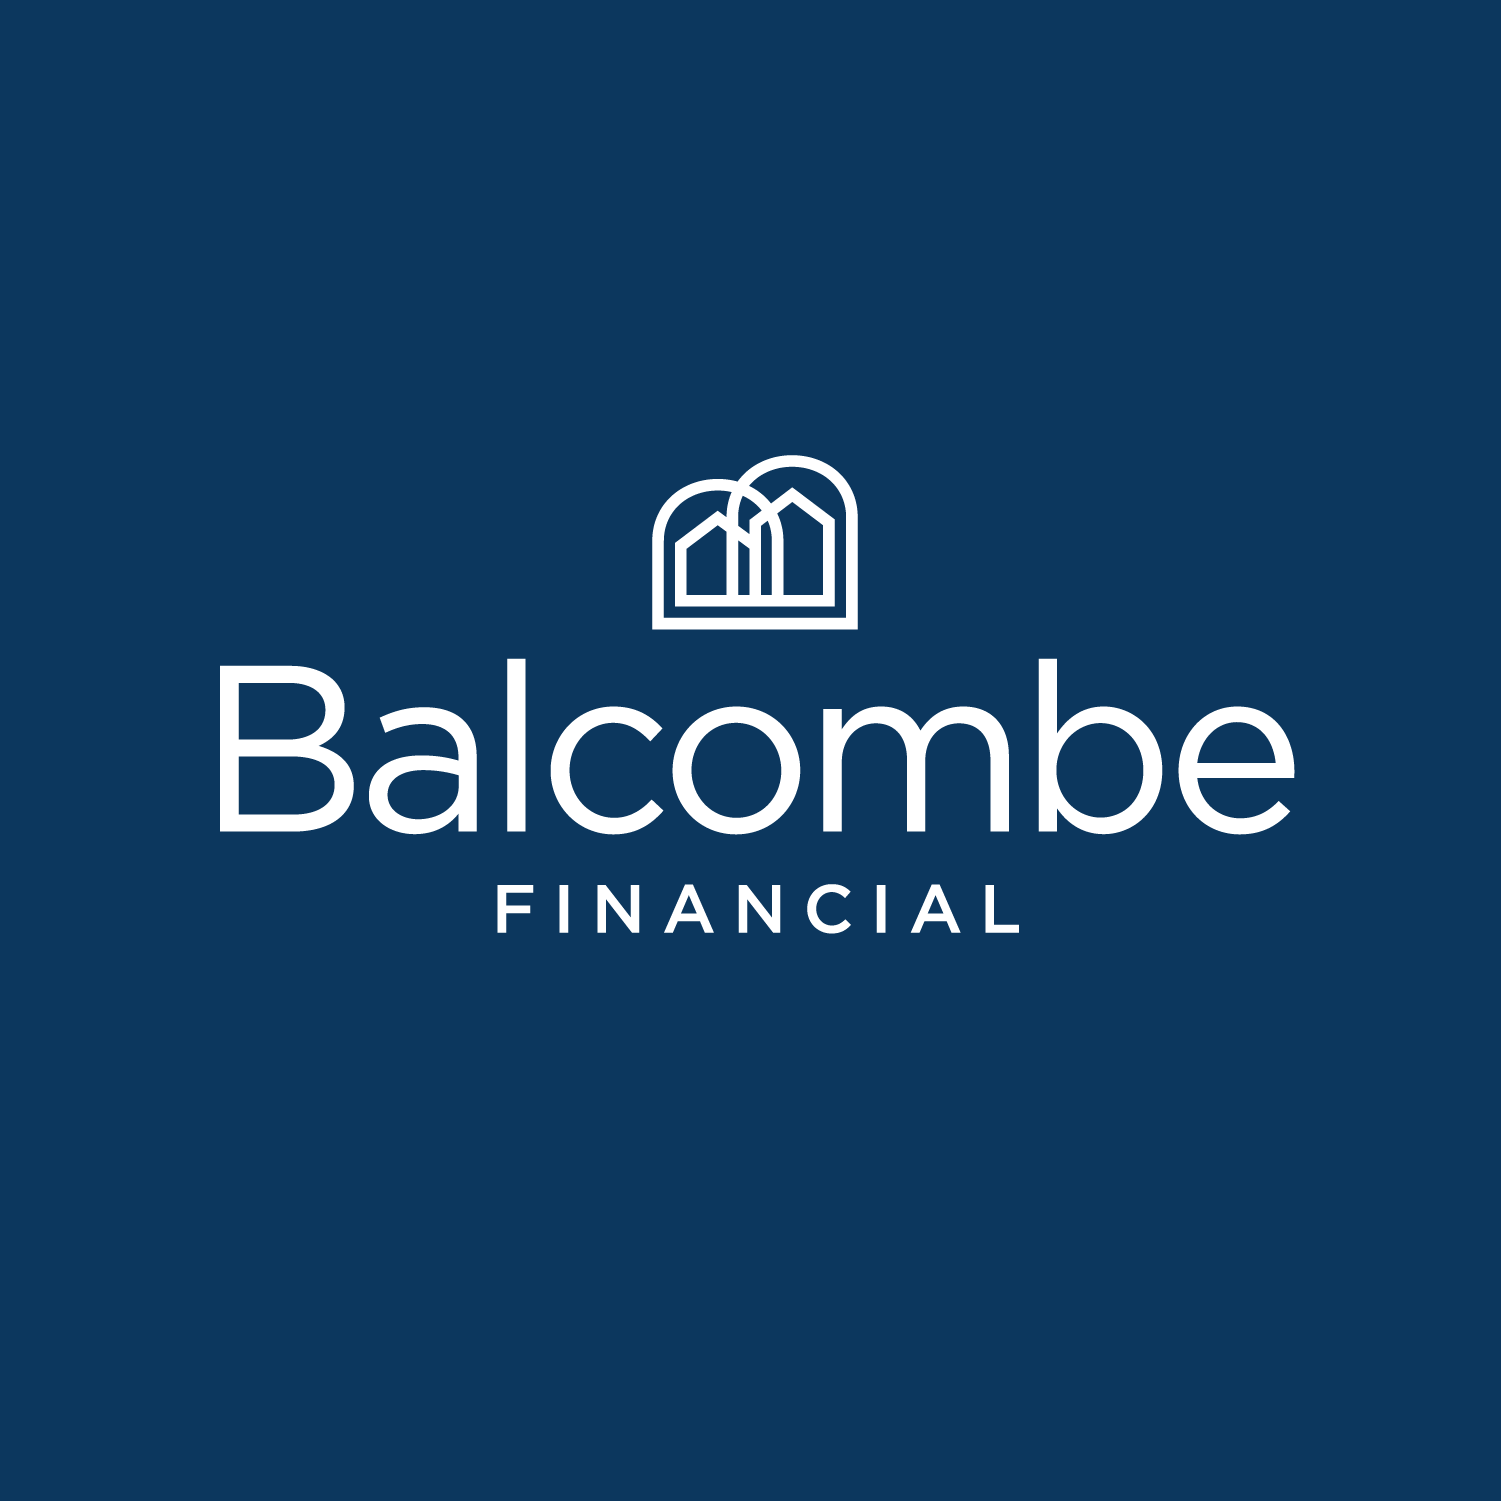 Balcombe Financial